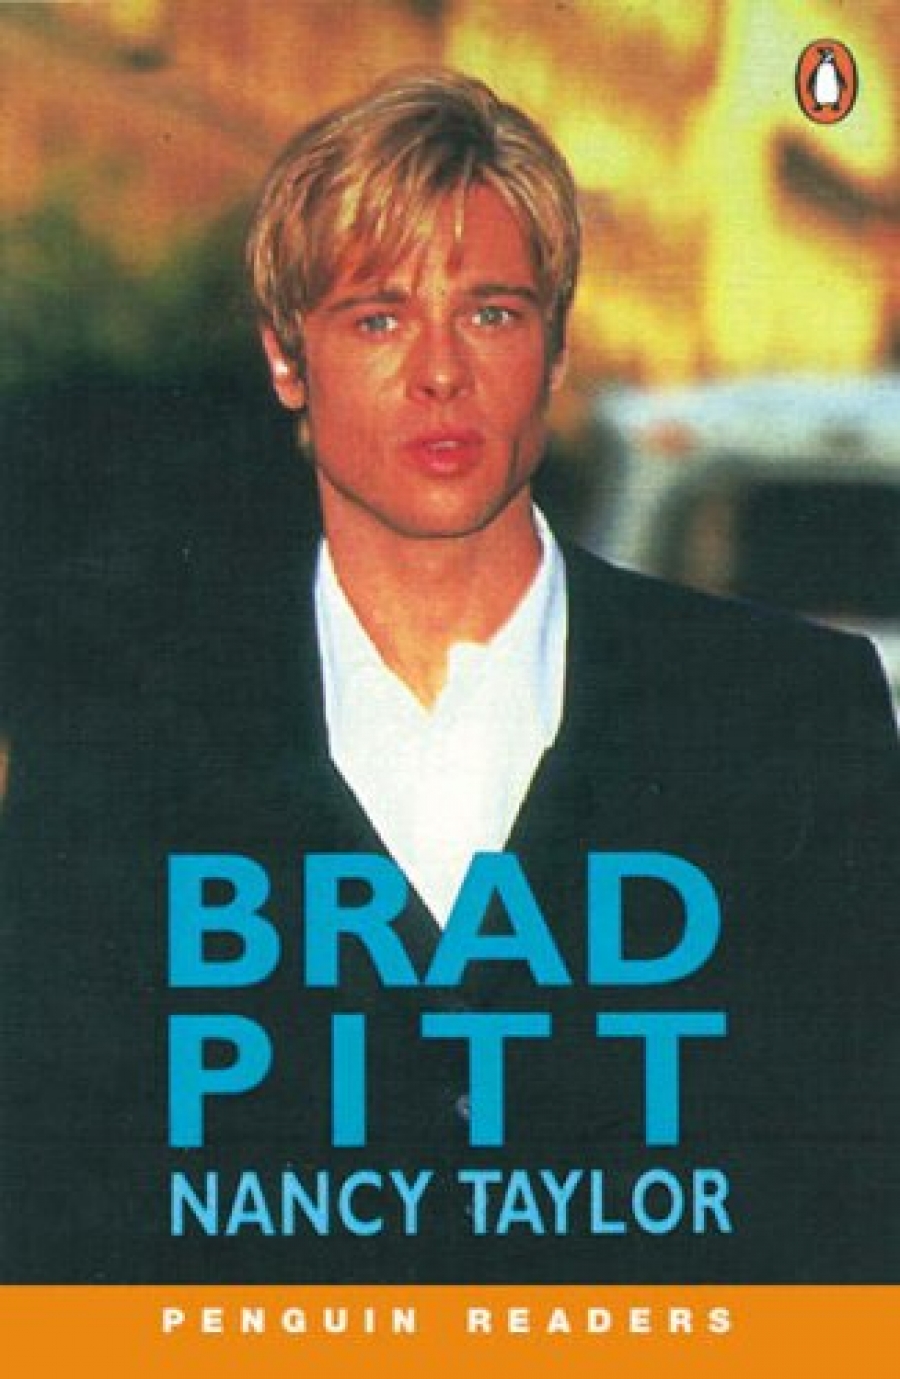 Nancy Taylor Penguin Reader Level 2: Brad Pitt: Book and Audio CD (Penguin Readers (Graded Readers)) 